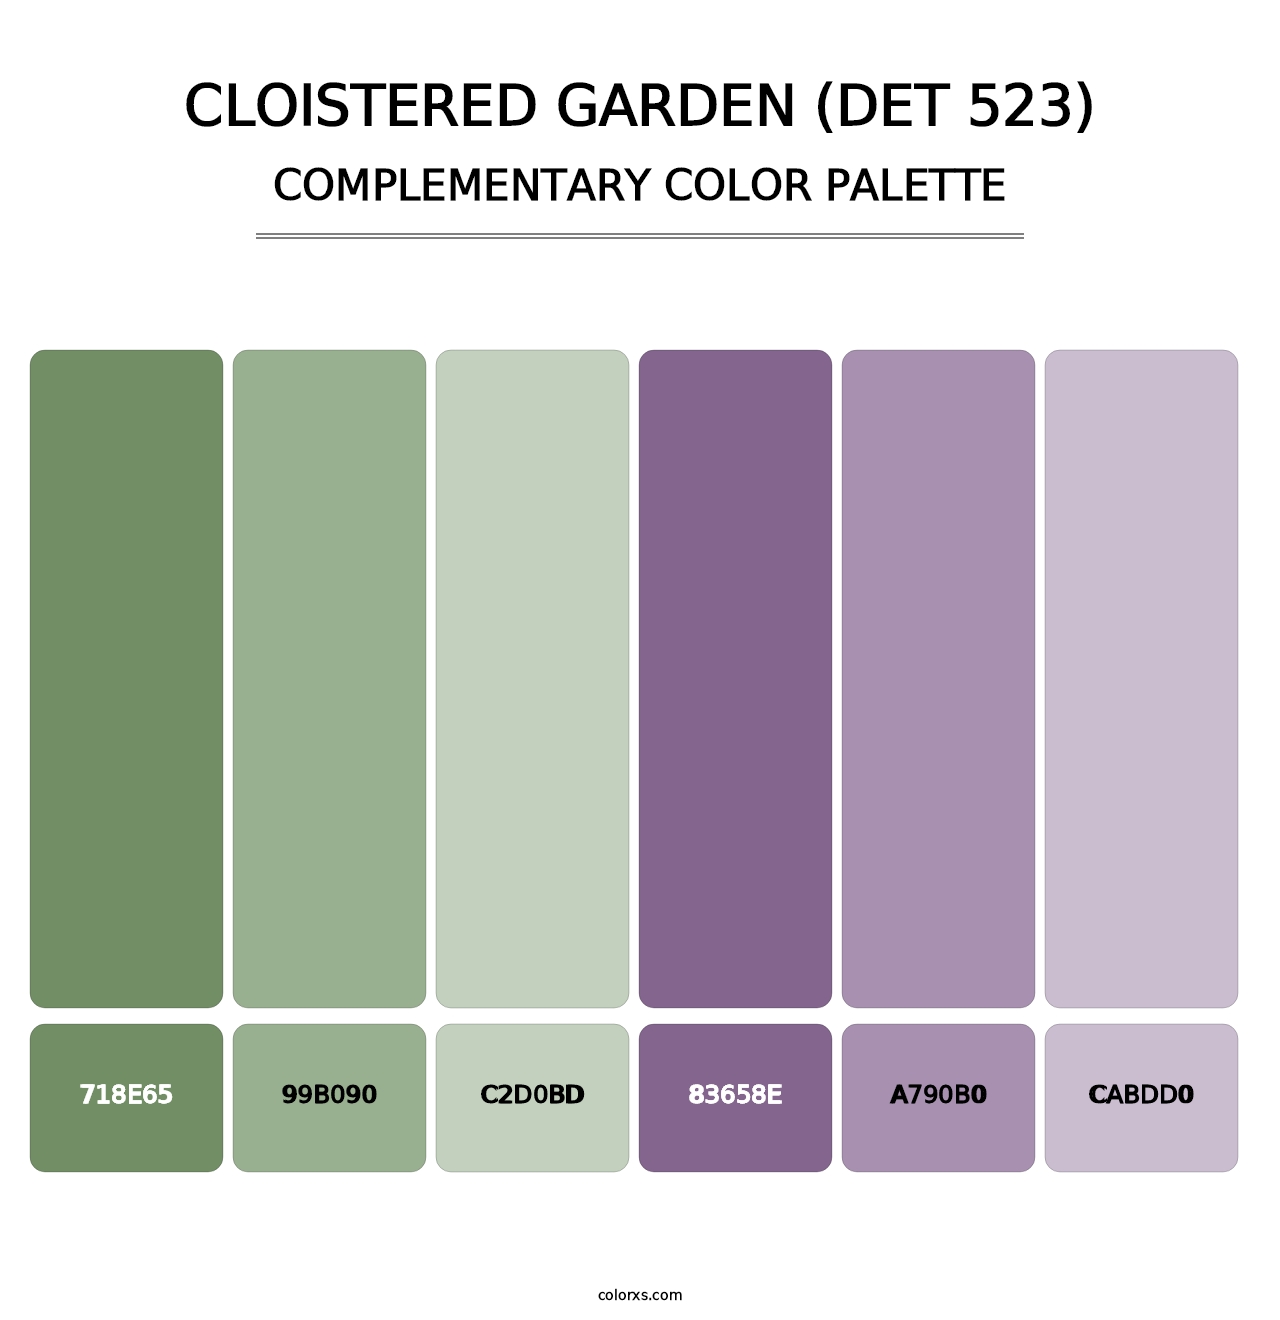 Cloistered Garden (DET 523) - Complementary Color Palette